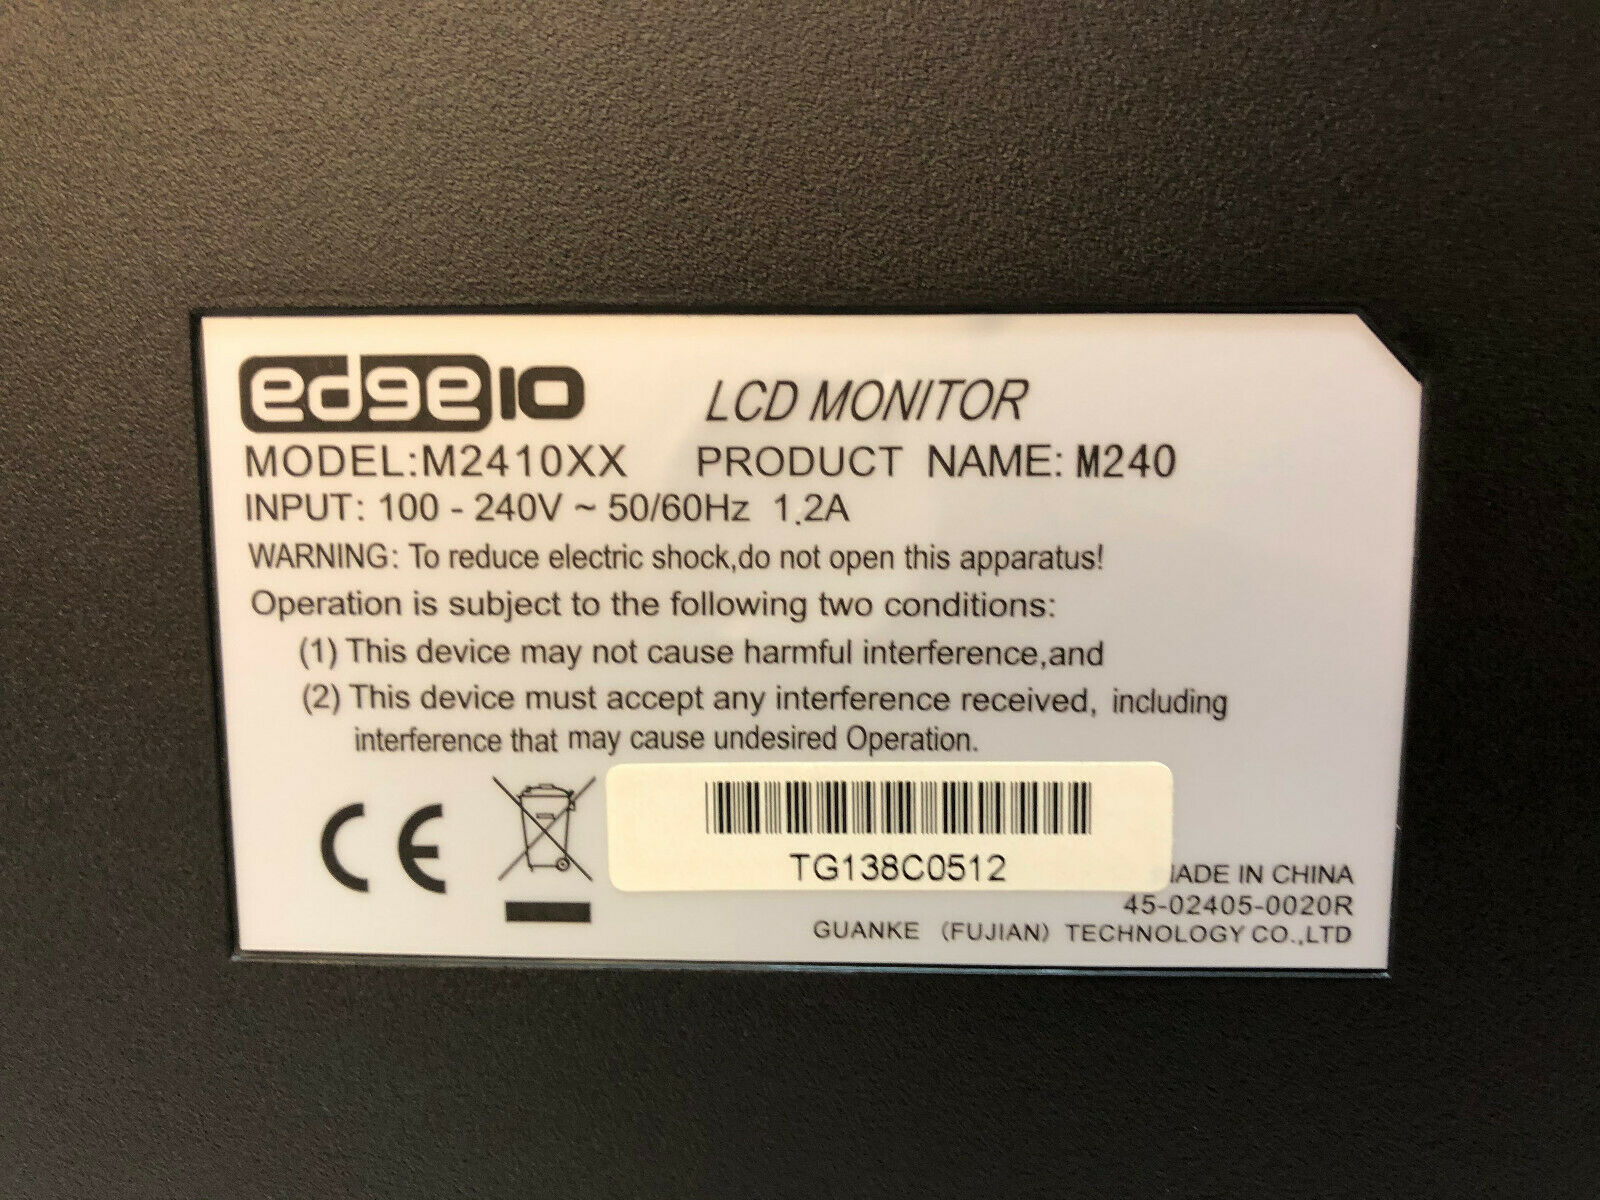 Refurbished Edge 10 M240 LCD Monitor